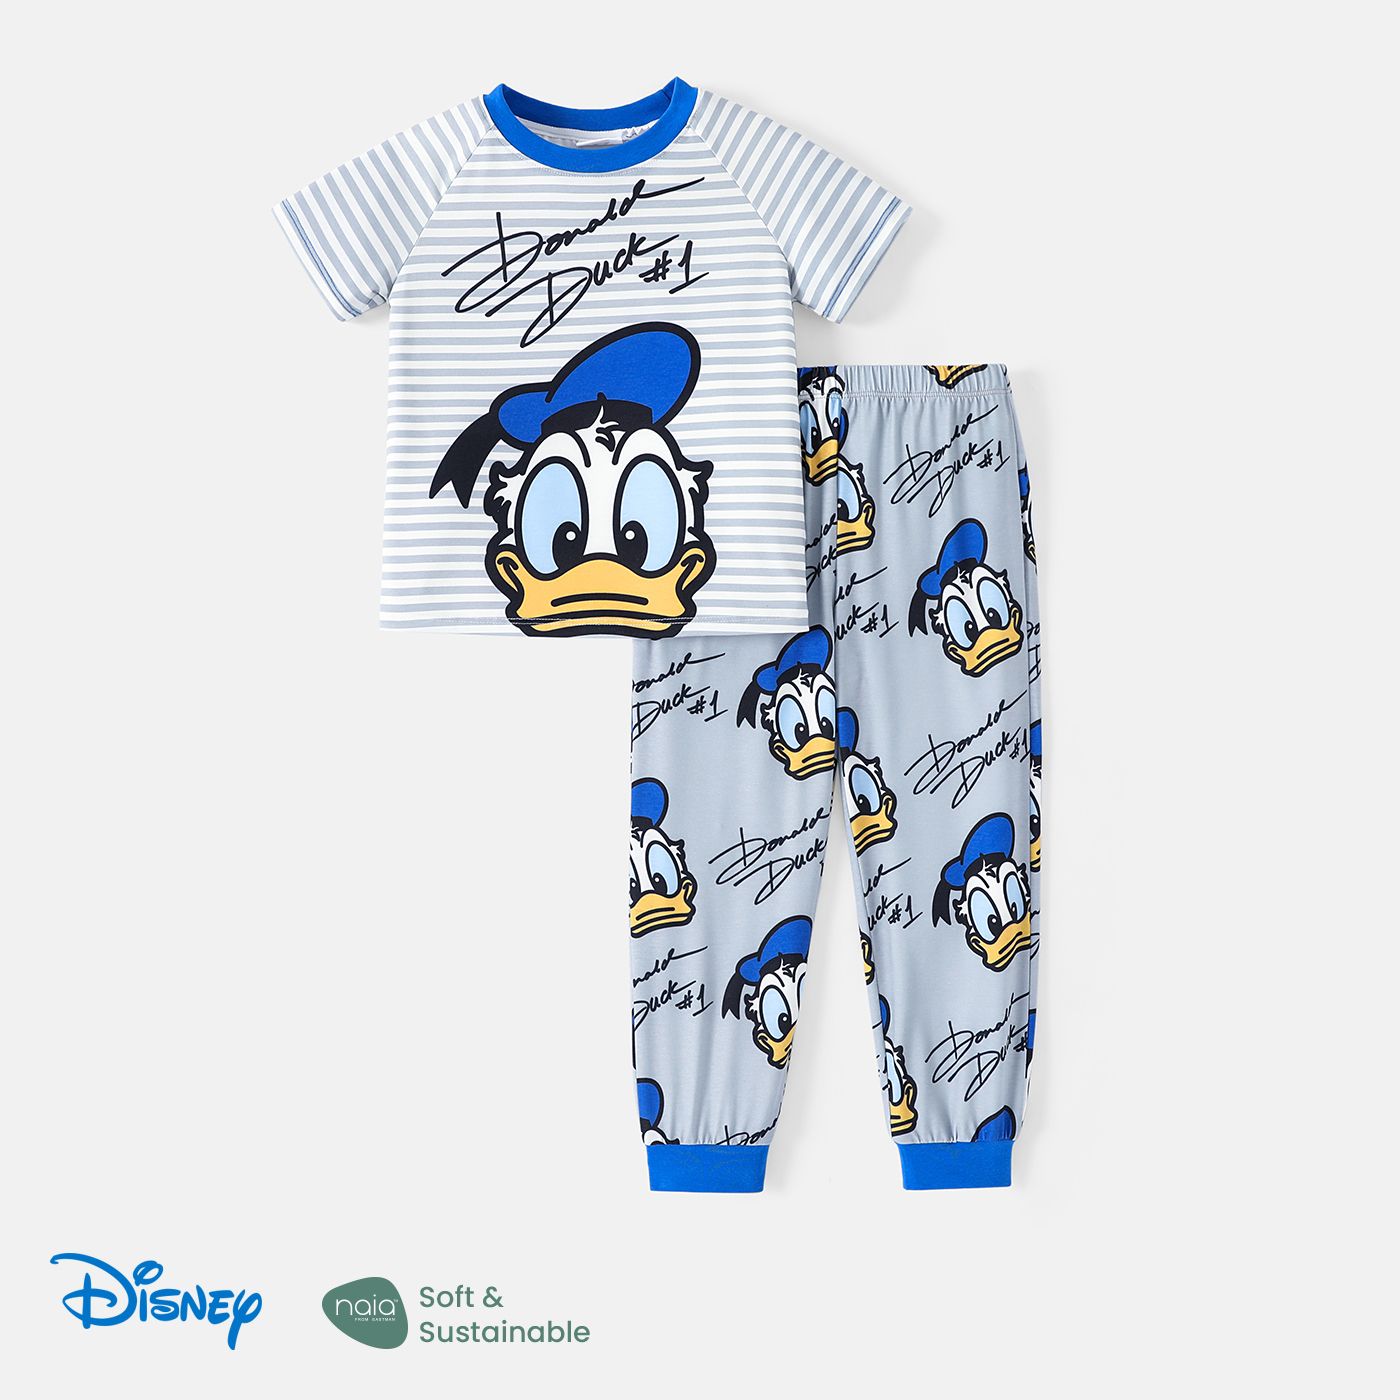 Disney Mickey And Friends Toddler Girl/Boy 2pcs Naiaâ¢ Character & Stripe Print Short-sleeve Tee And Pants Set